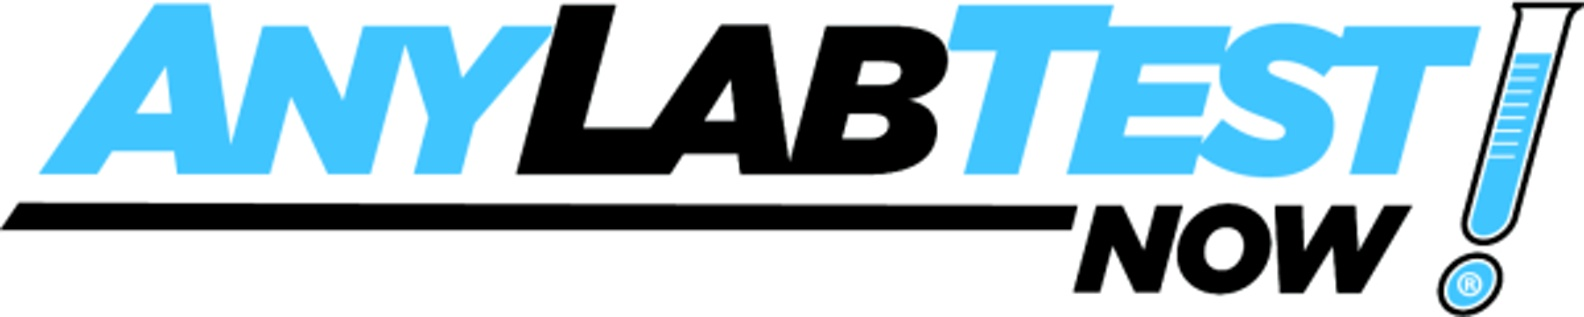 Any Lab Test Now - Medina Logo